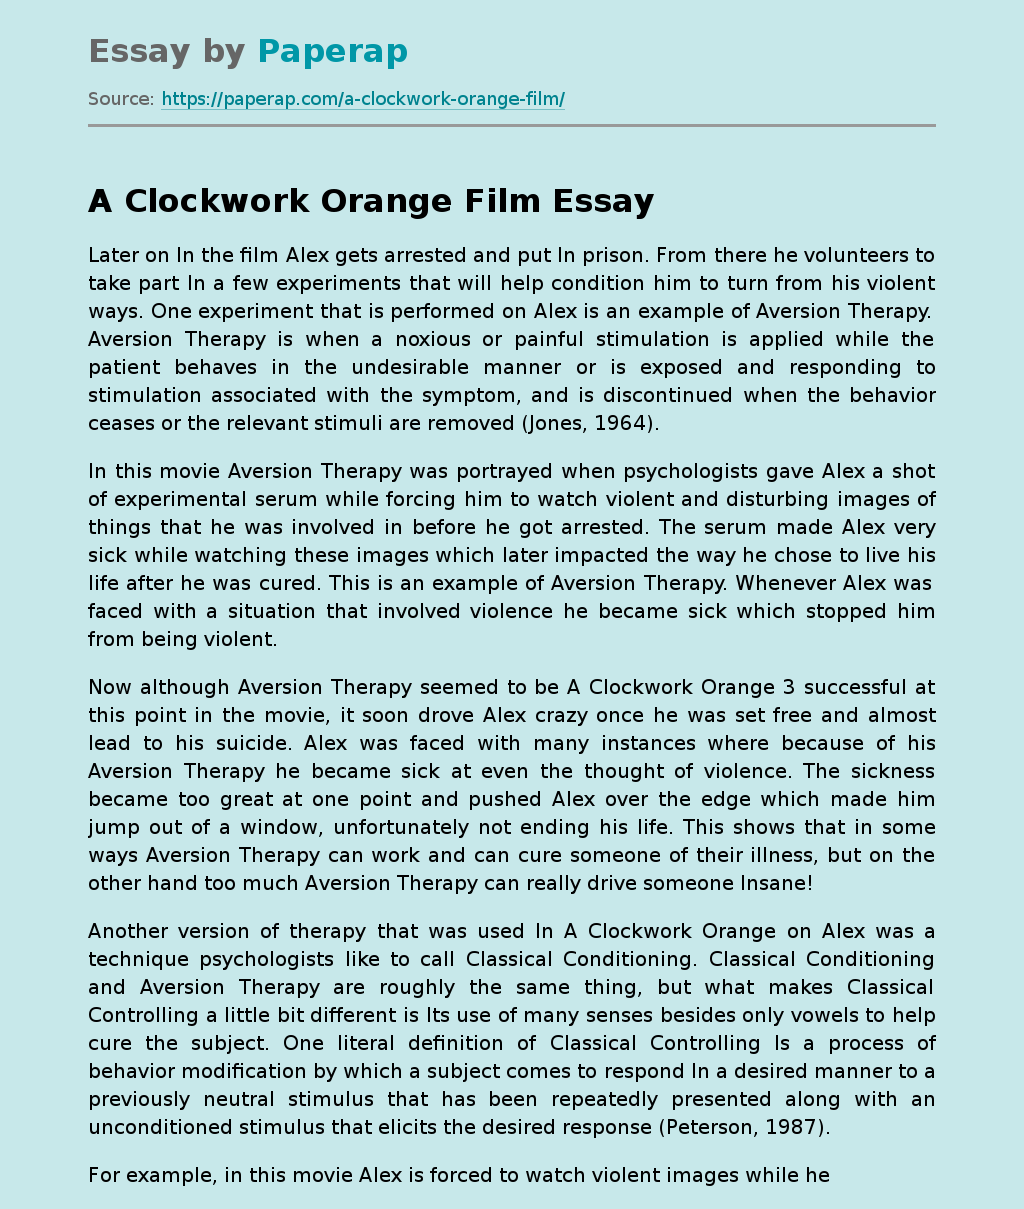 A Clockwork Orange Film